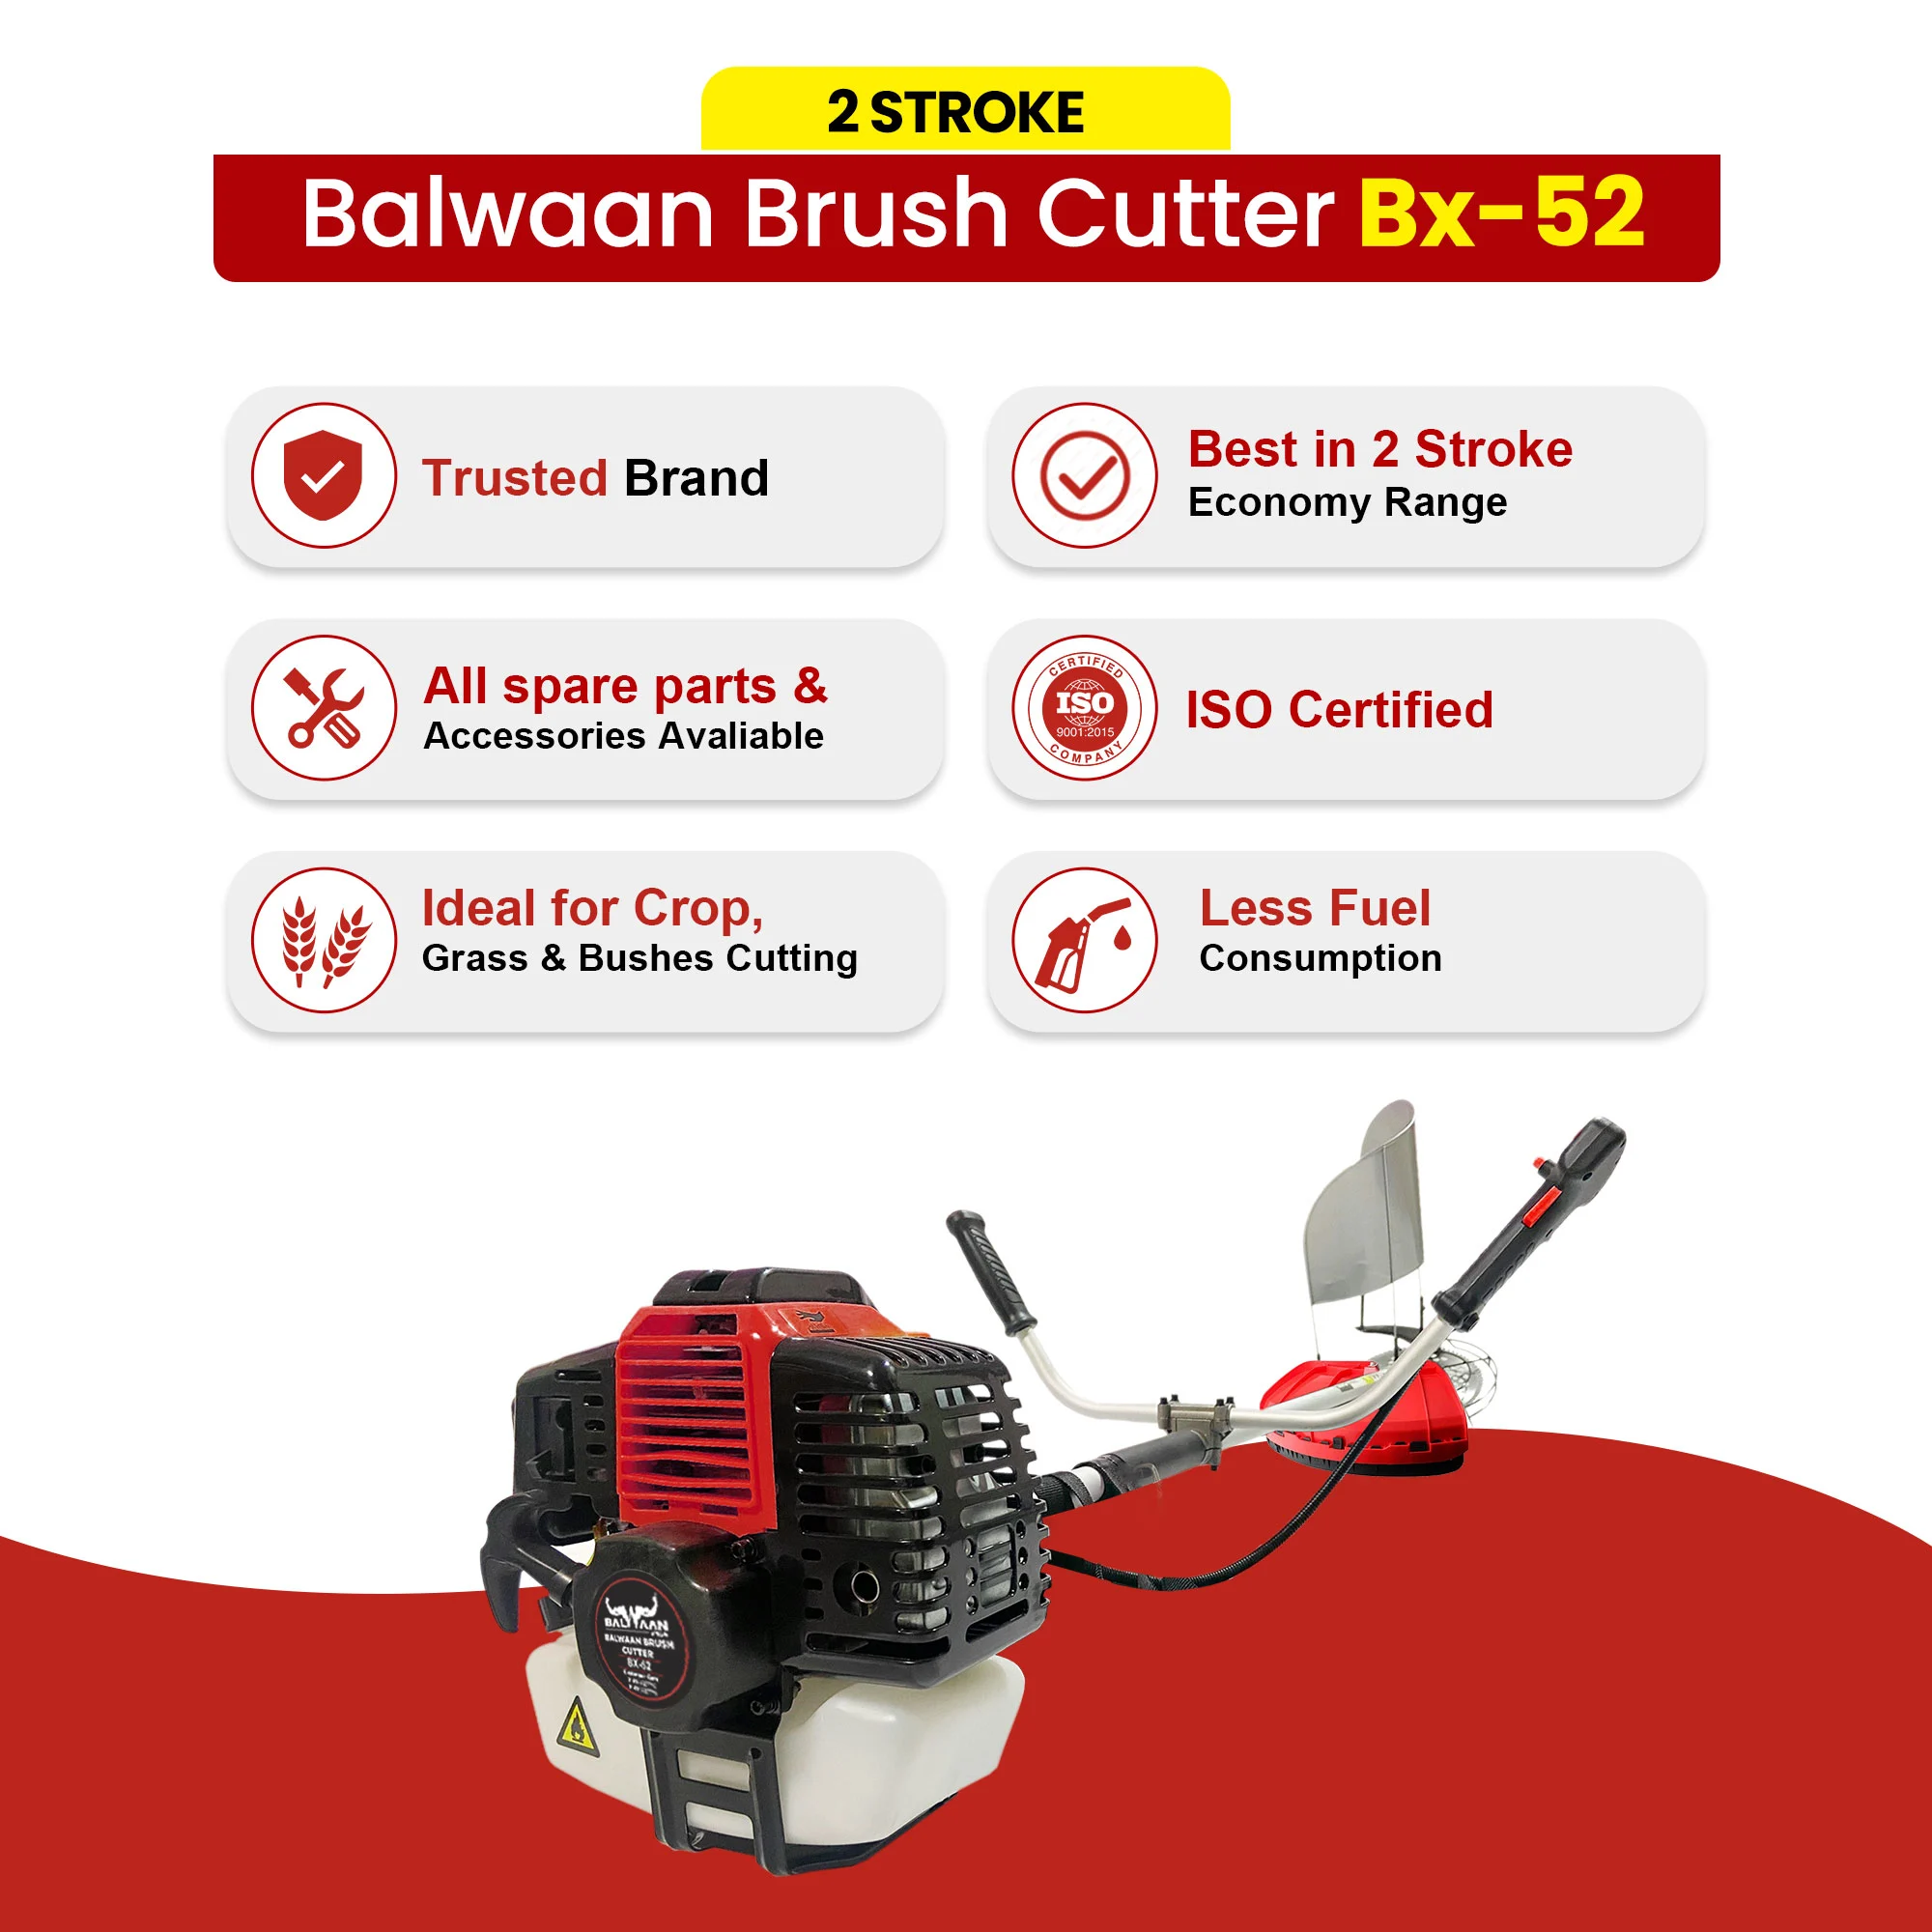 major-specifications-of-Balwaan-brush-cutter-bx-52